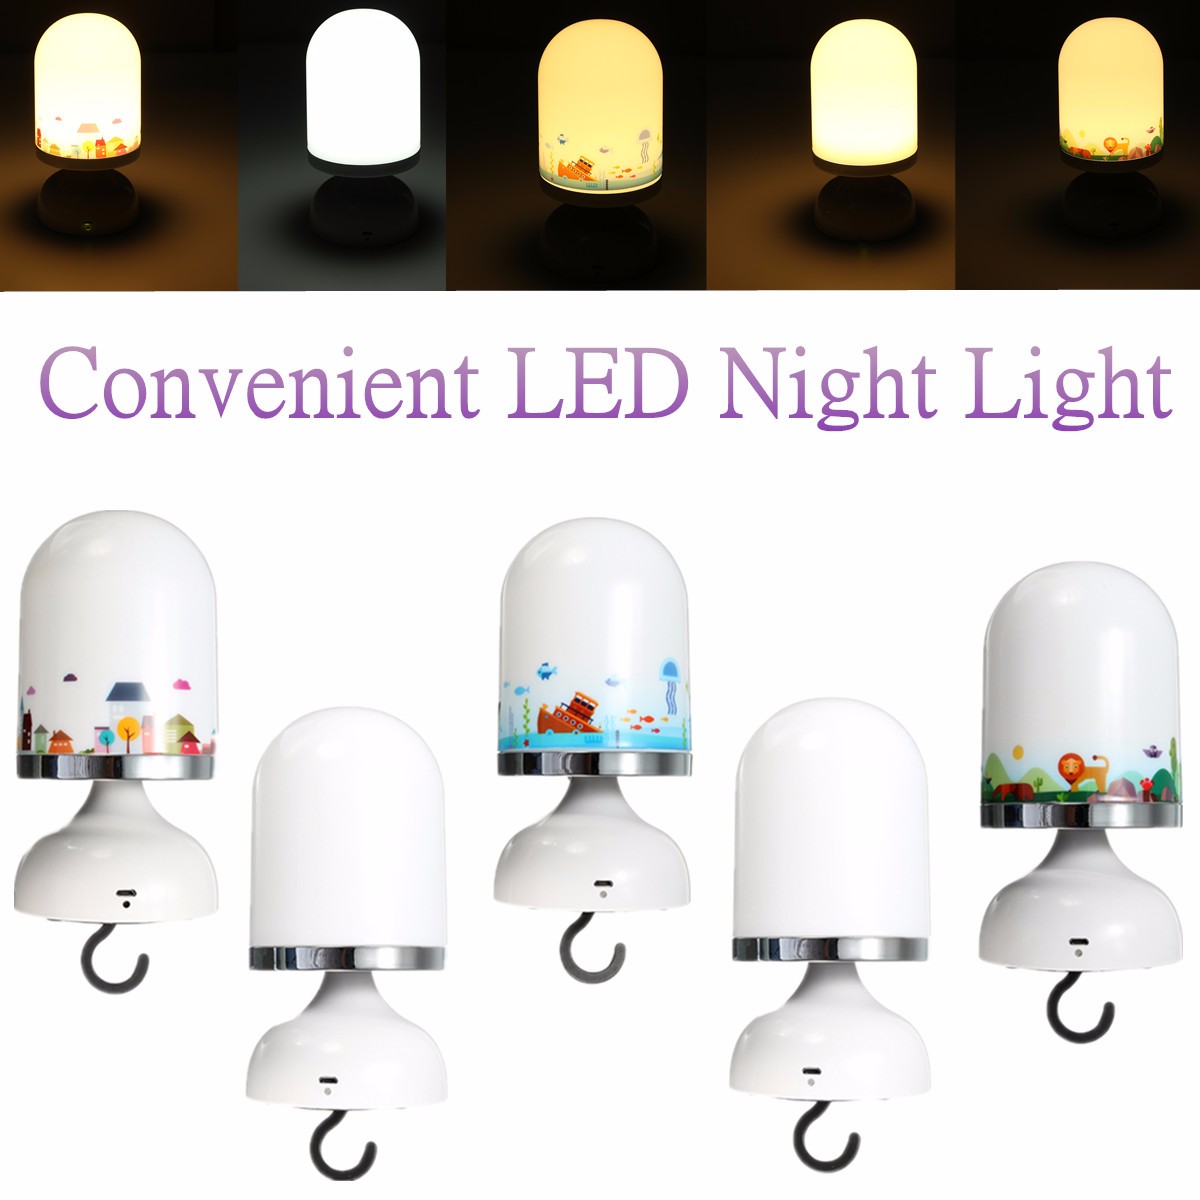 Portable-USB-Rechargeable-LED-Night-Light-Hanging-Stand-Table-Vibration-Sensor-Lamp-1085102-1